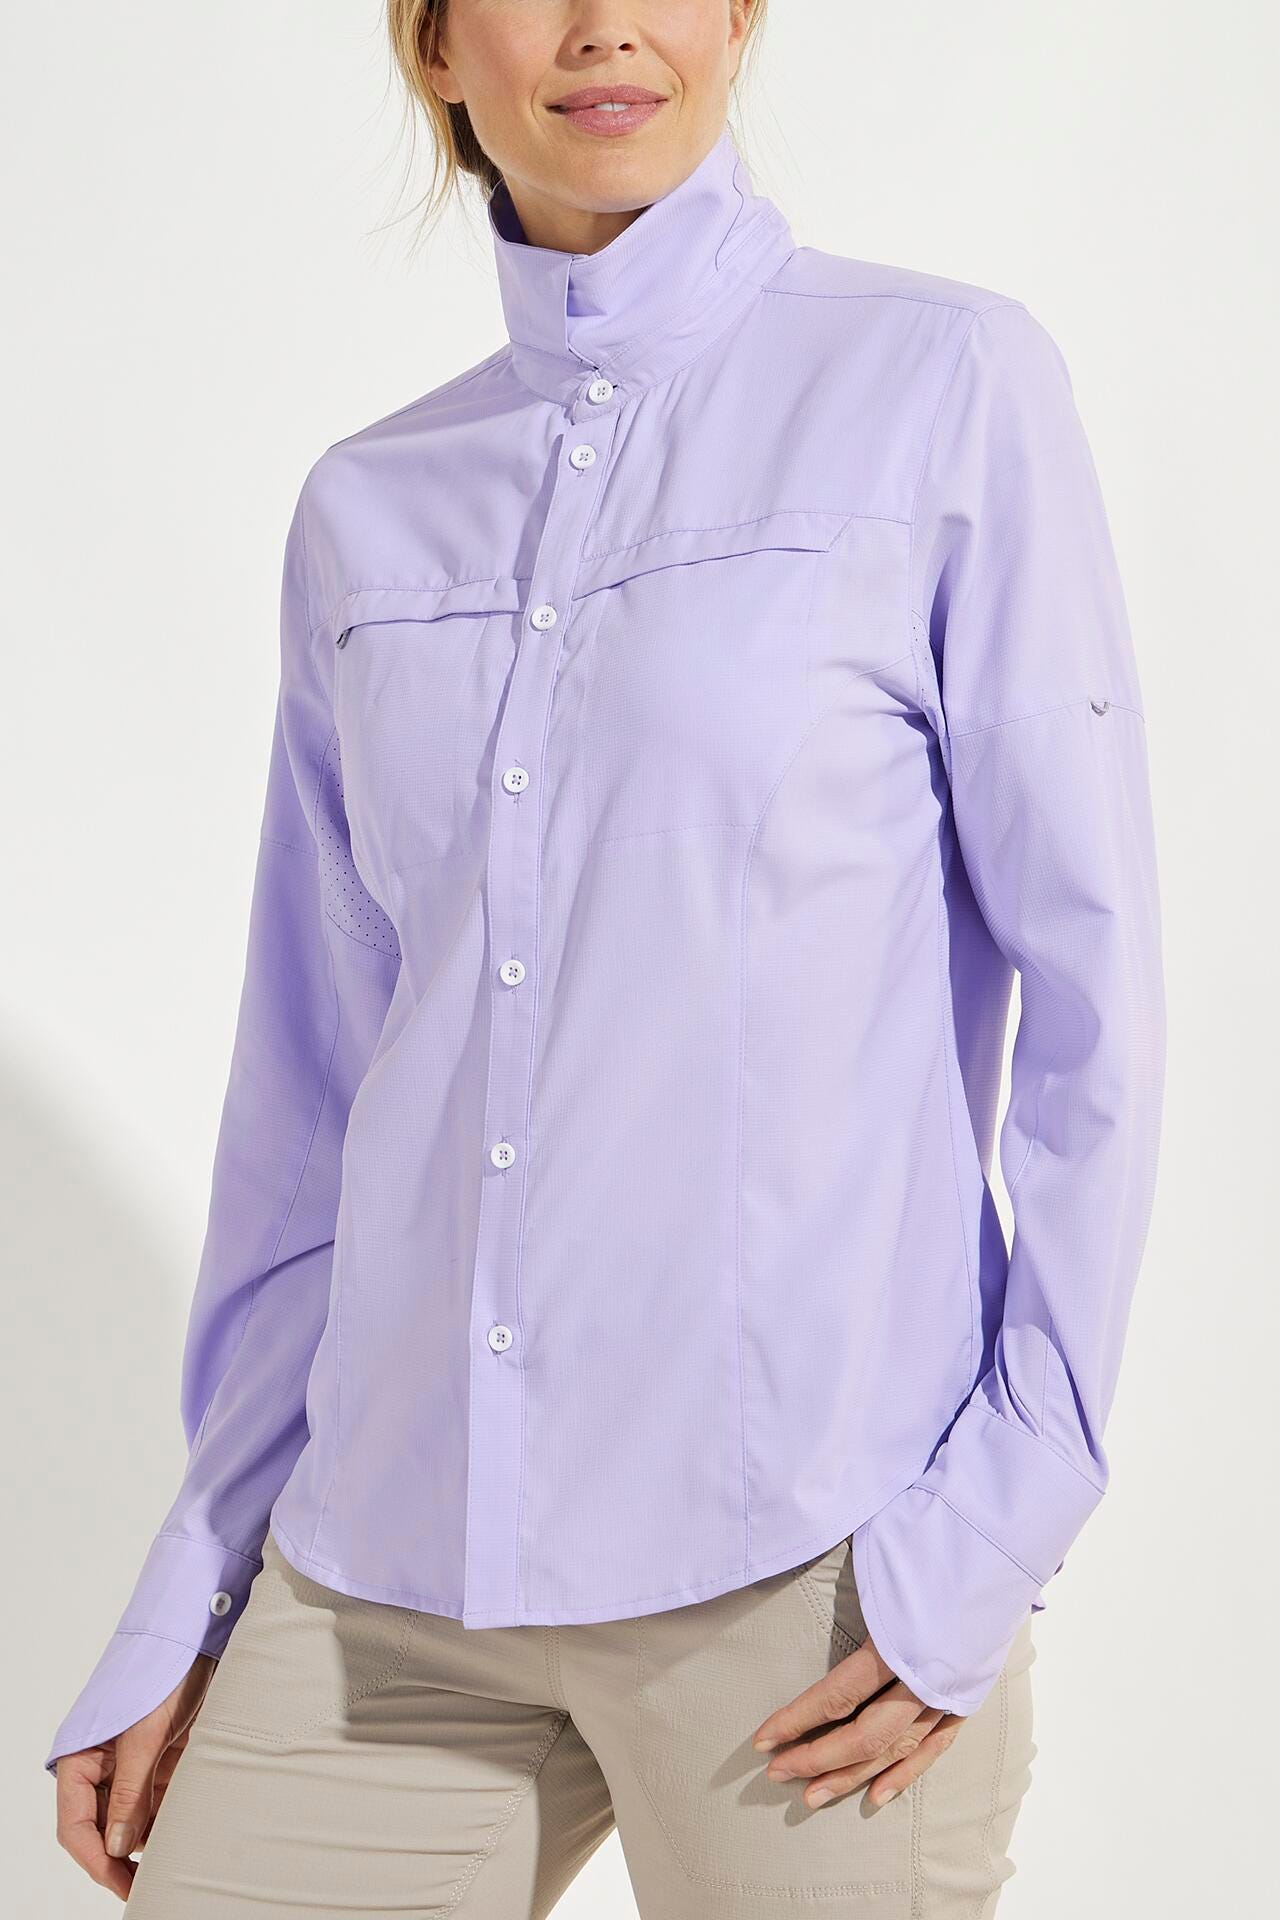 Women SeaGuard™ Custom Fishing Shirt Long Sleeve UPF 50+